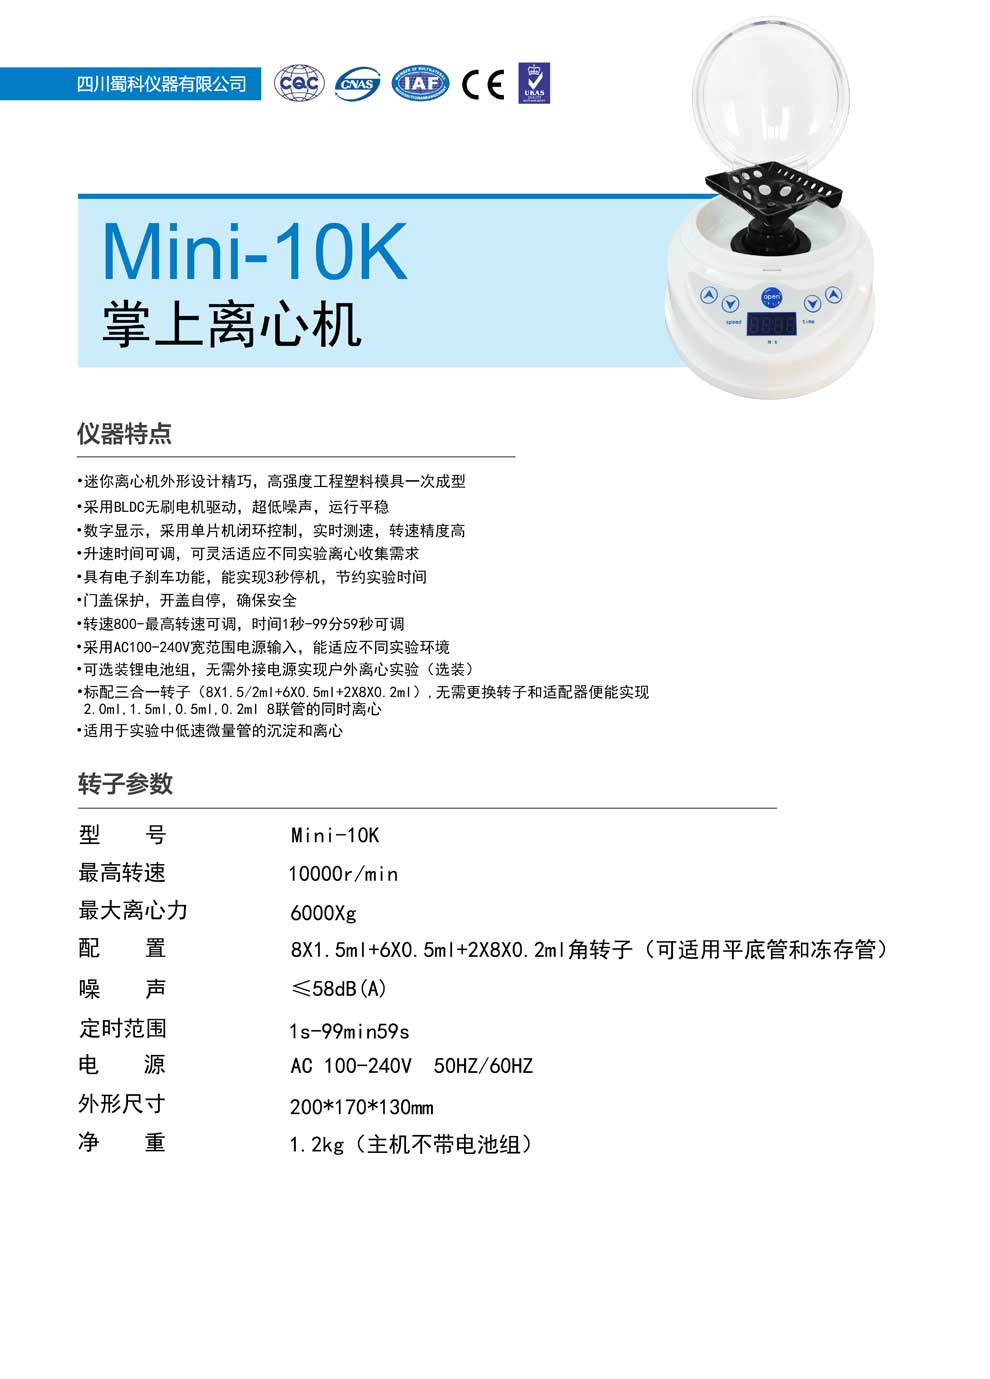 Mini-10K-彩页.jpg